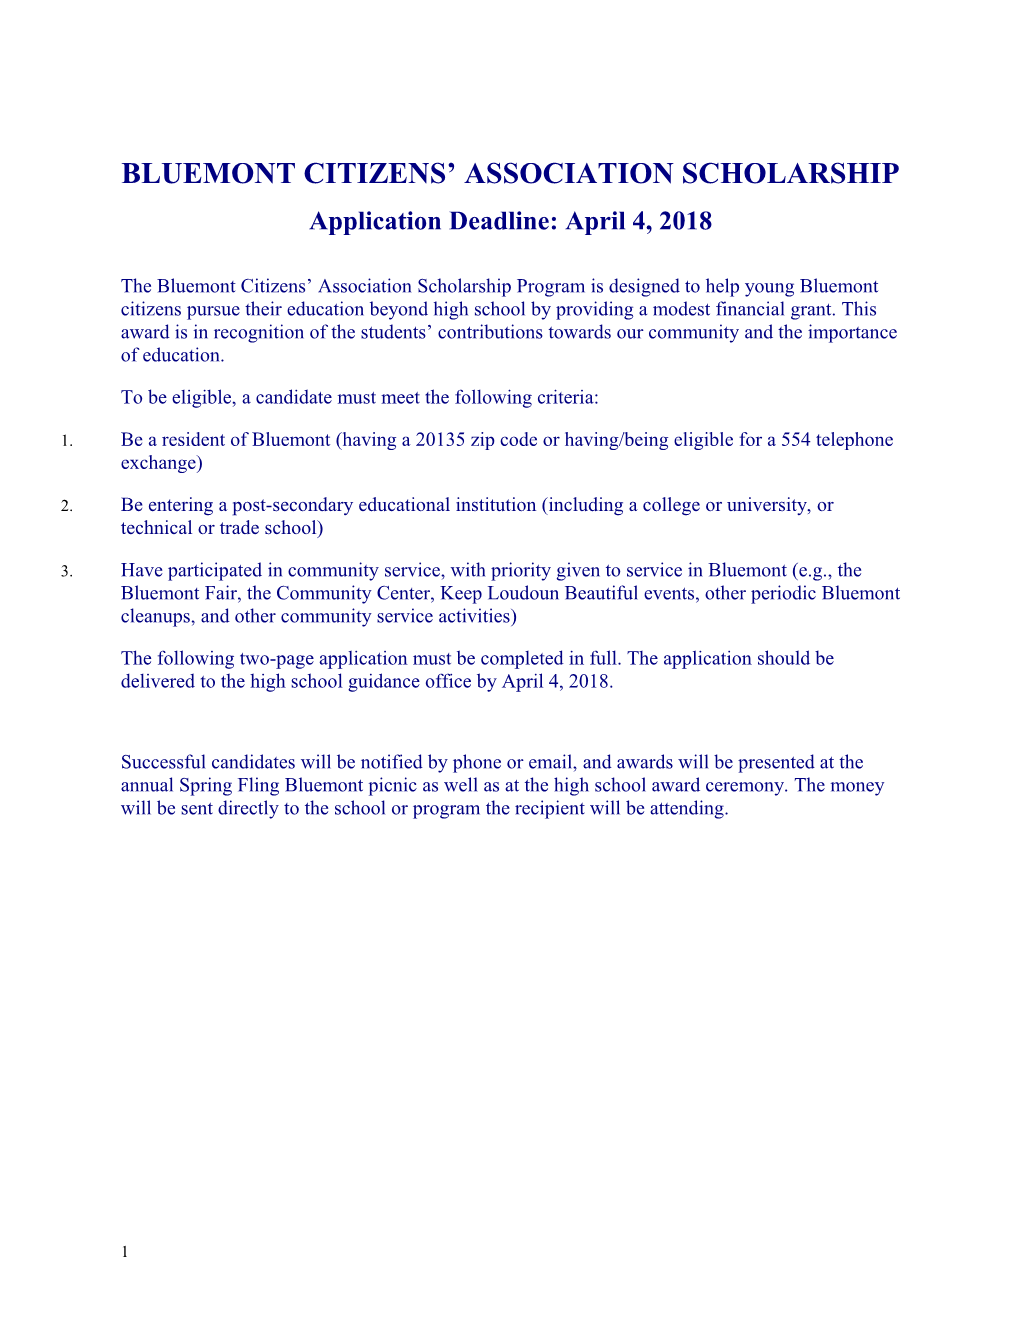 Bluemont Citizens Association Scholarship